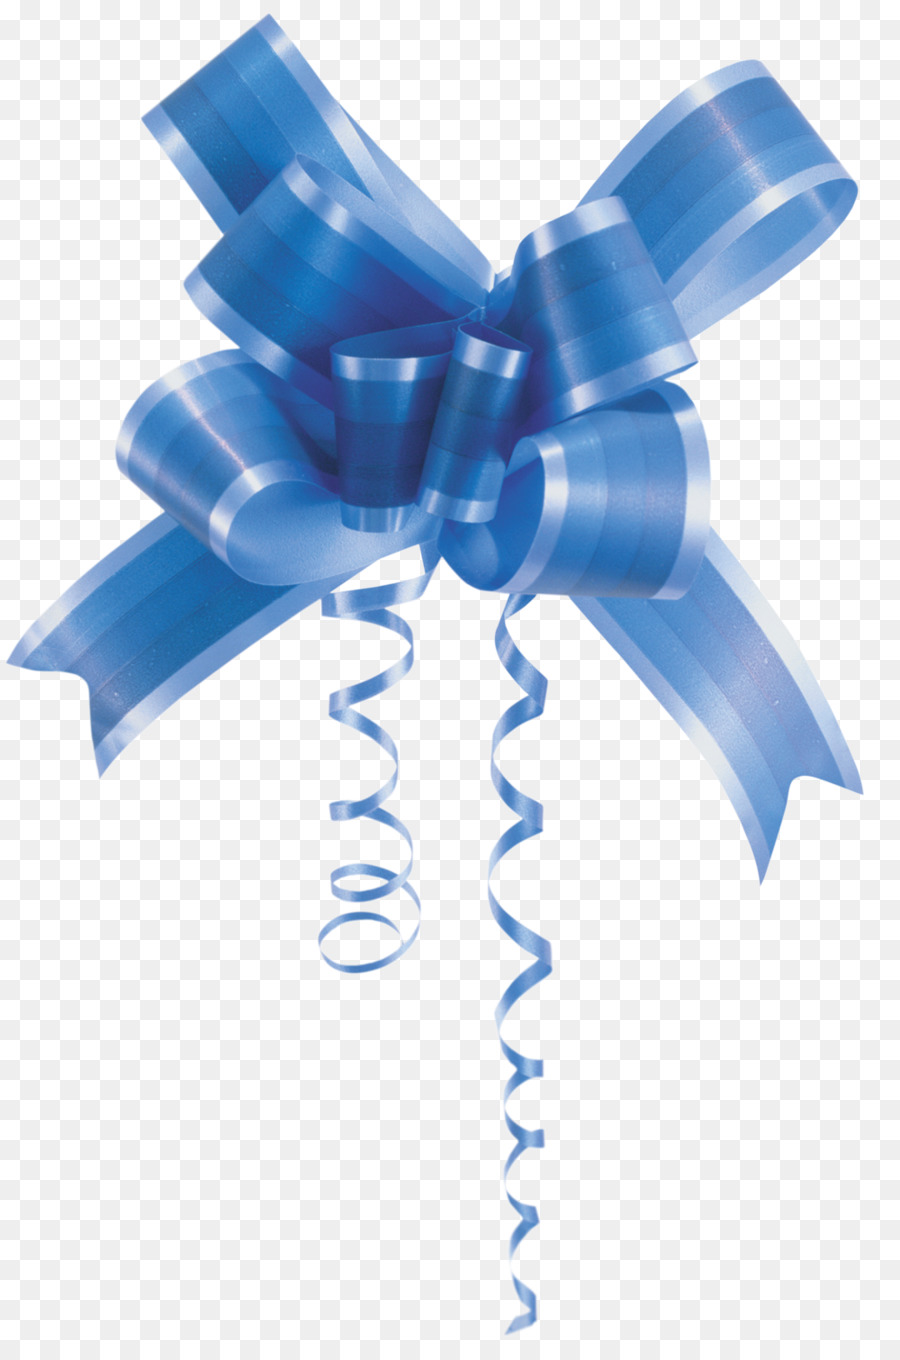 Blue Ribbon Clip art - bowknot png download - 1000*1500 - Free Transparent Blue png Download.